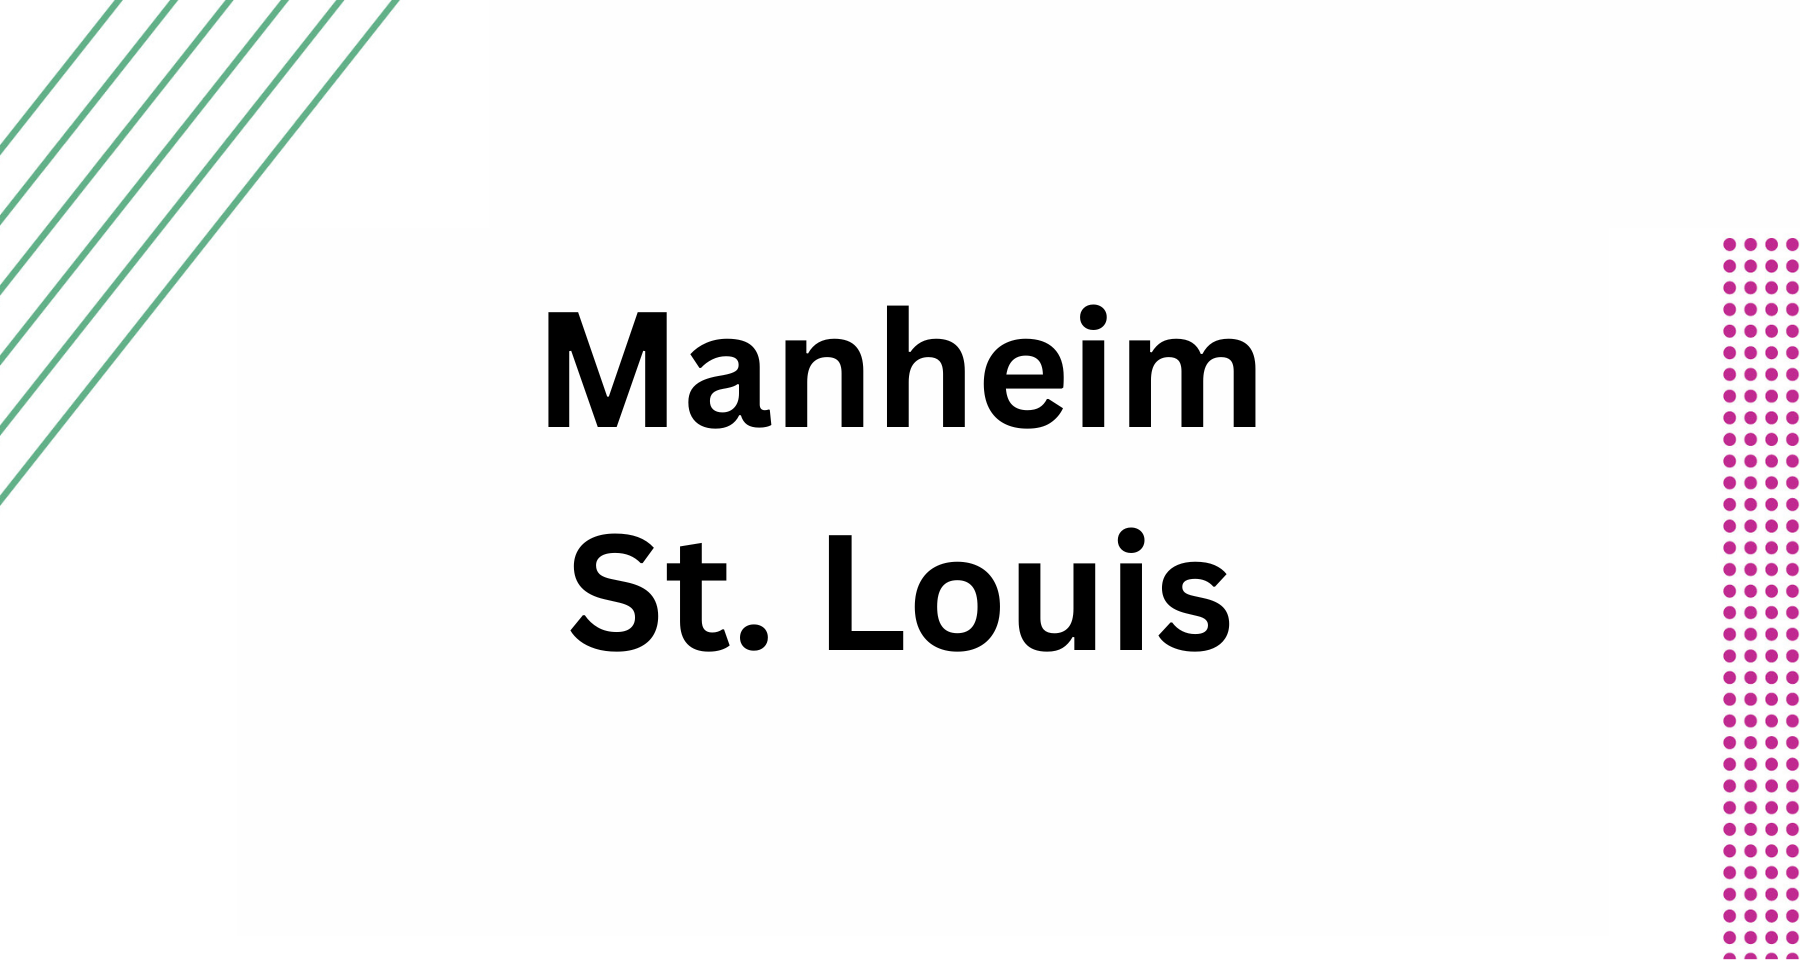 Manheim St. Louis